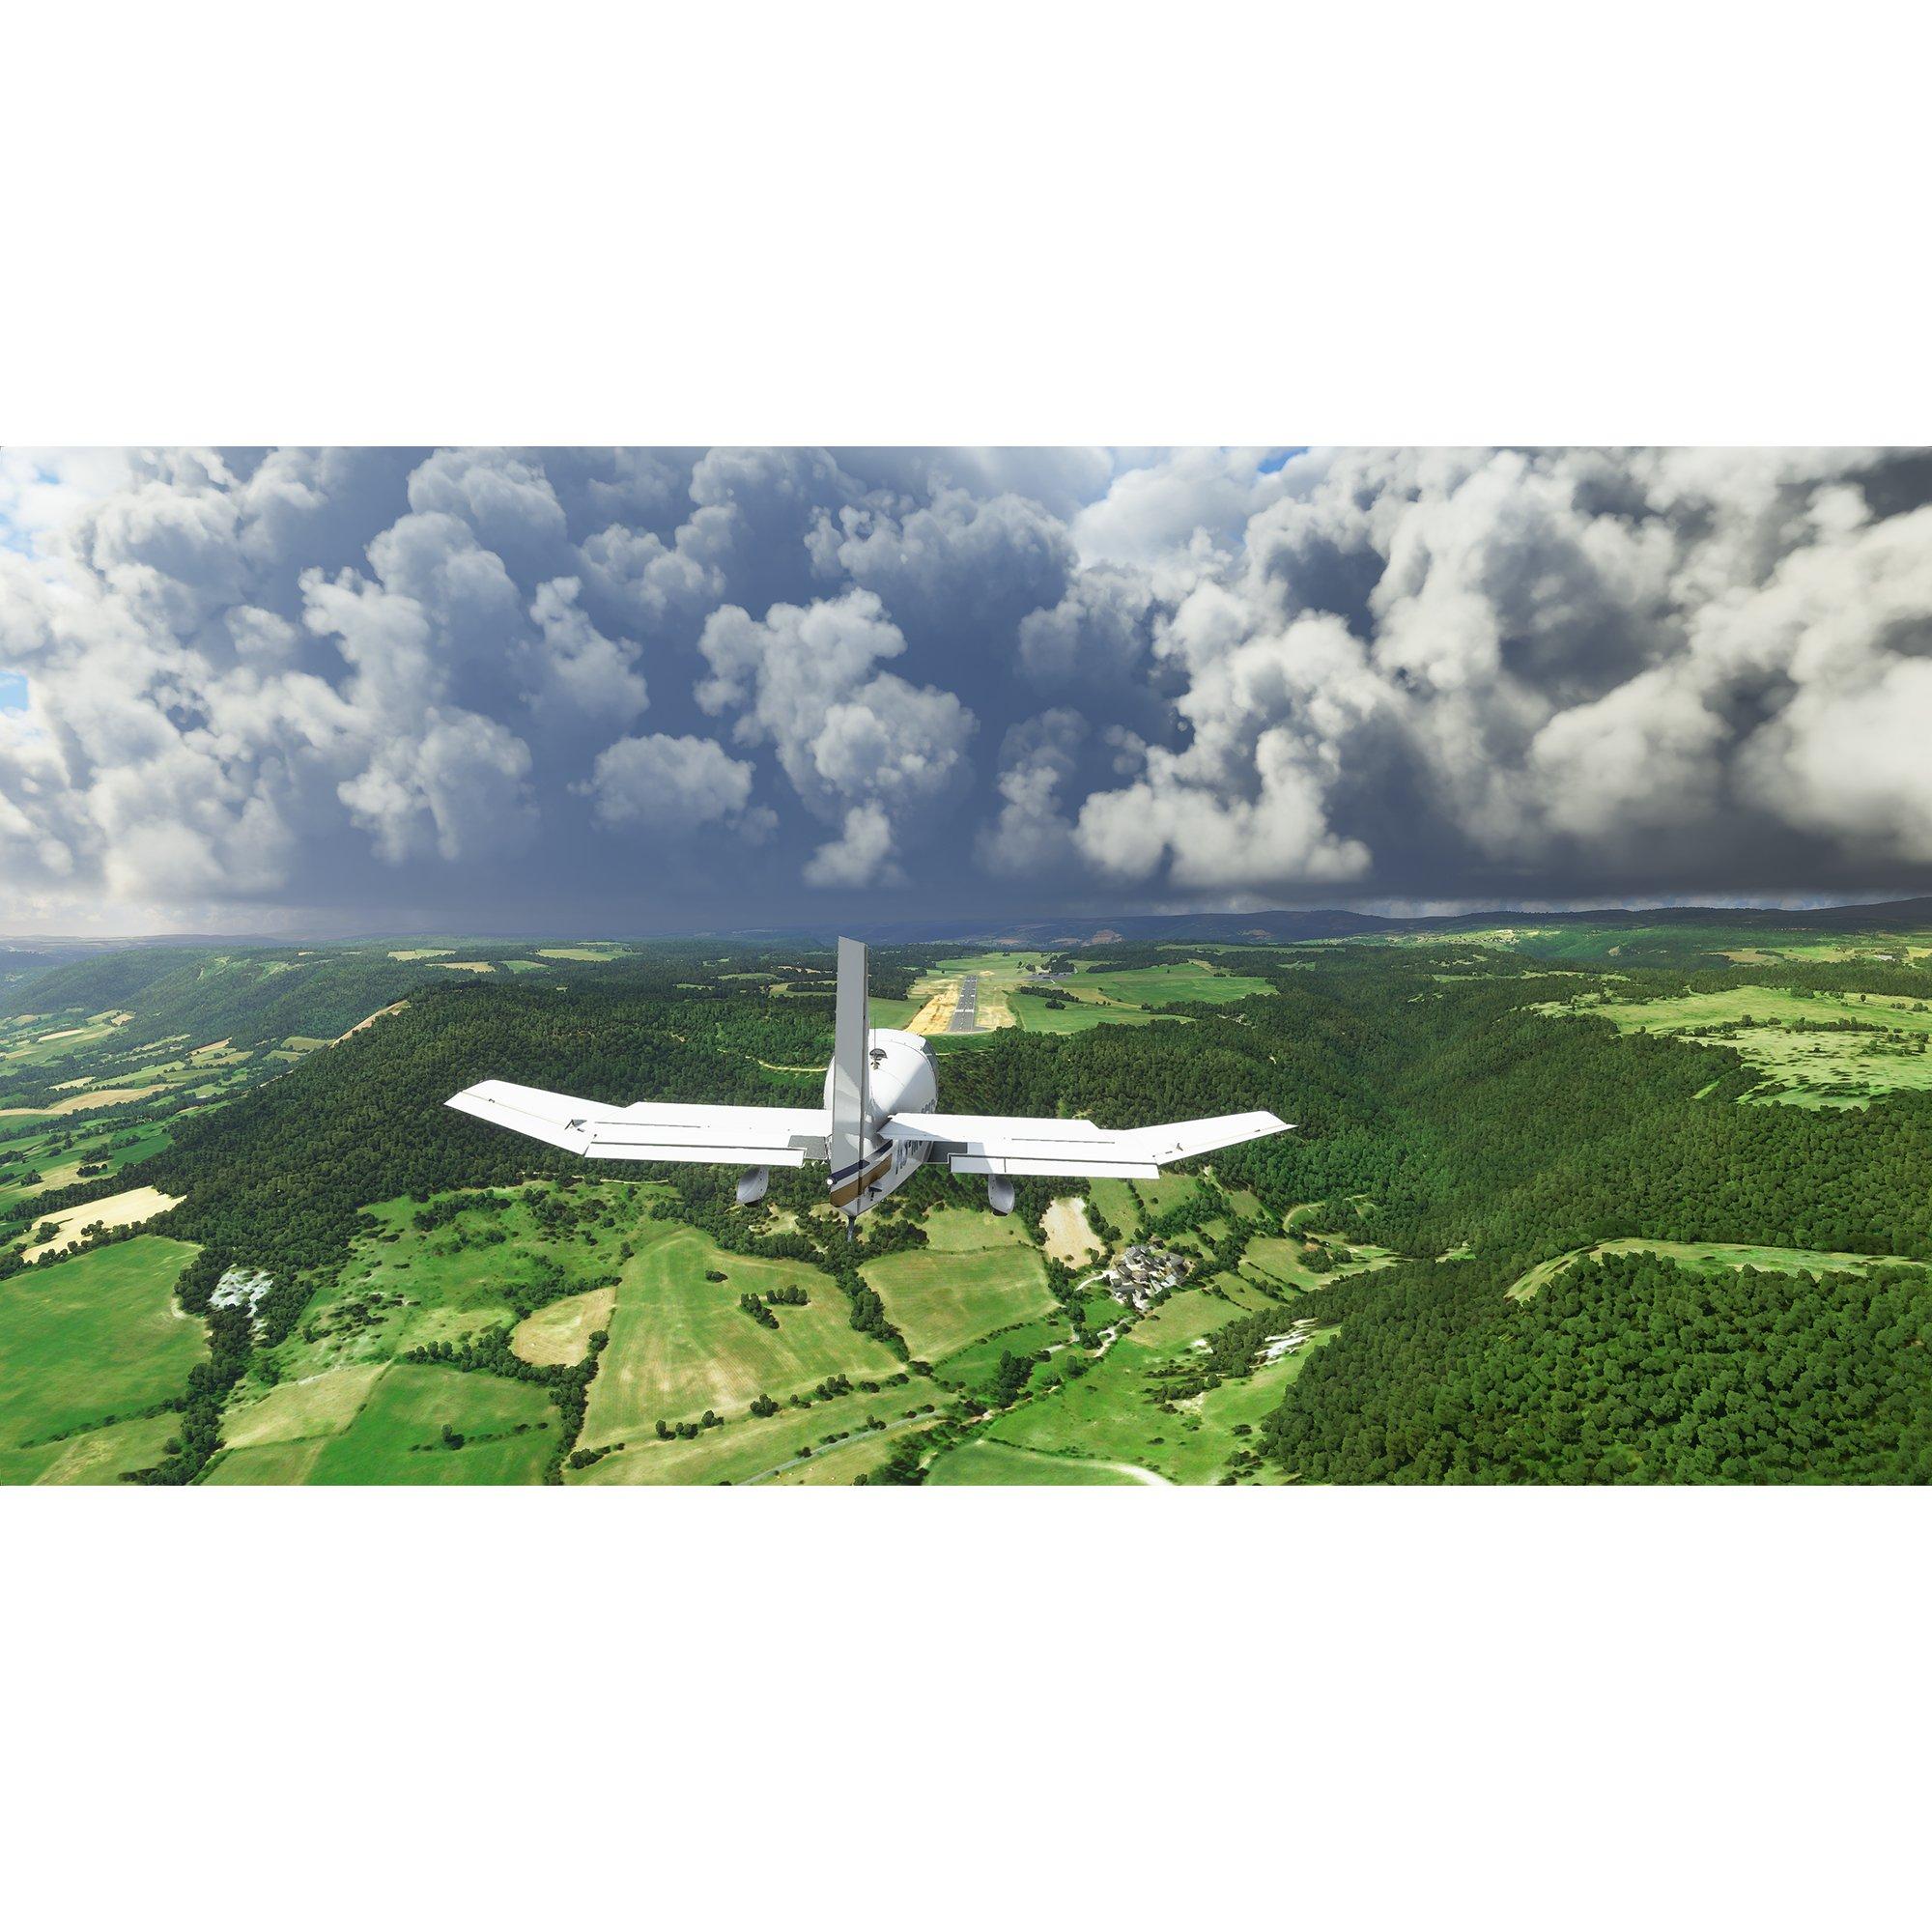 Microsoft Flight Simulator Standard Edition for PC